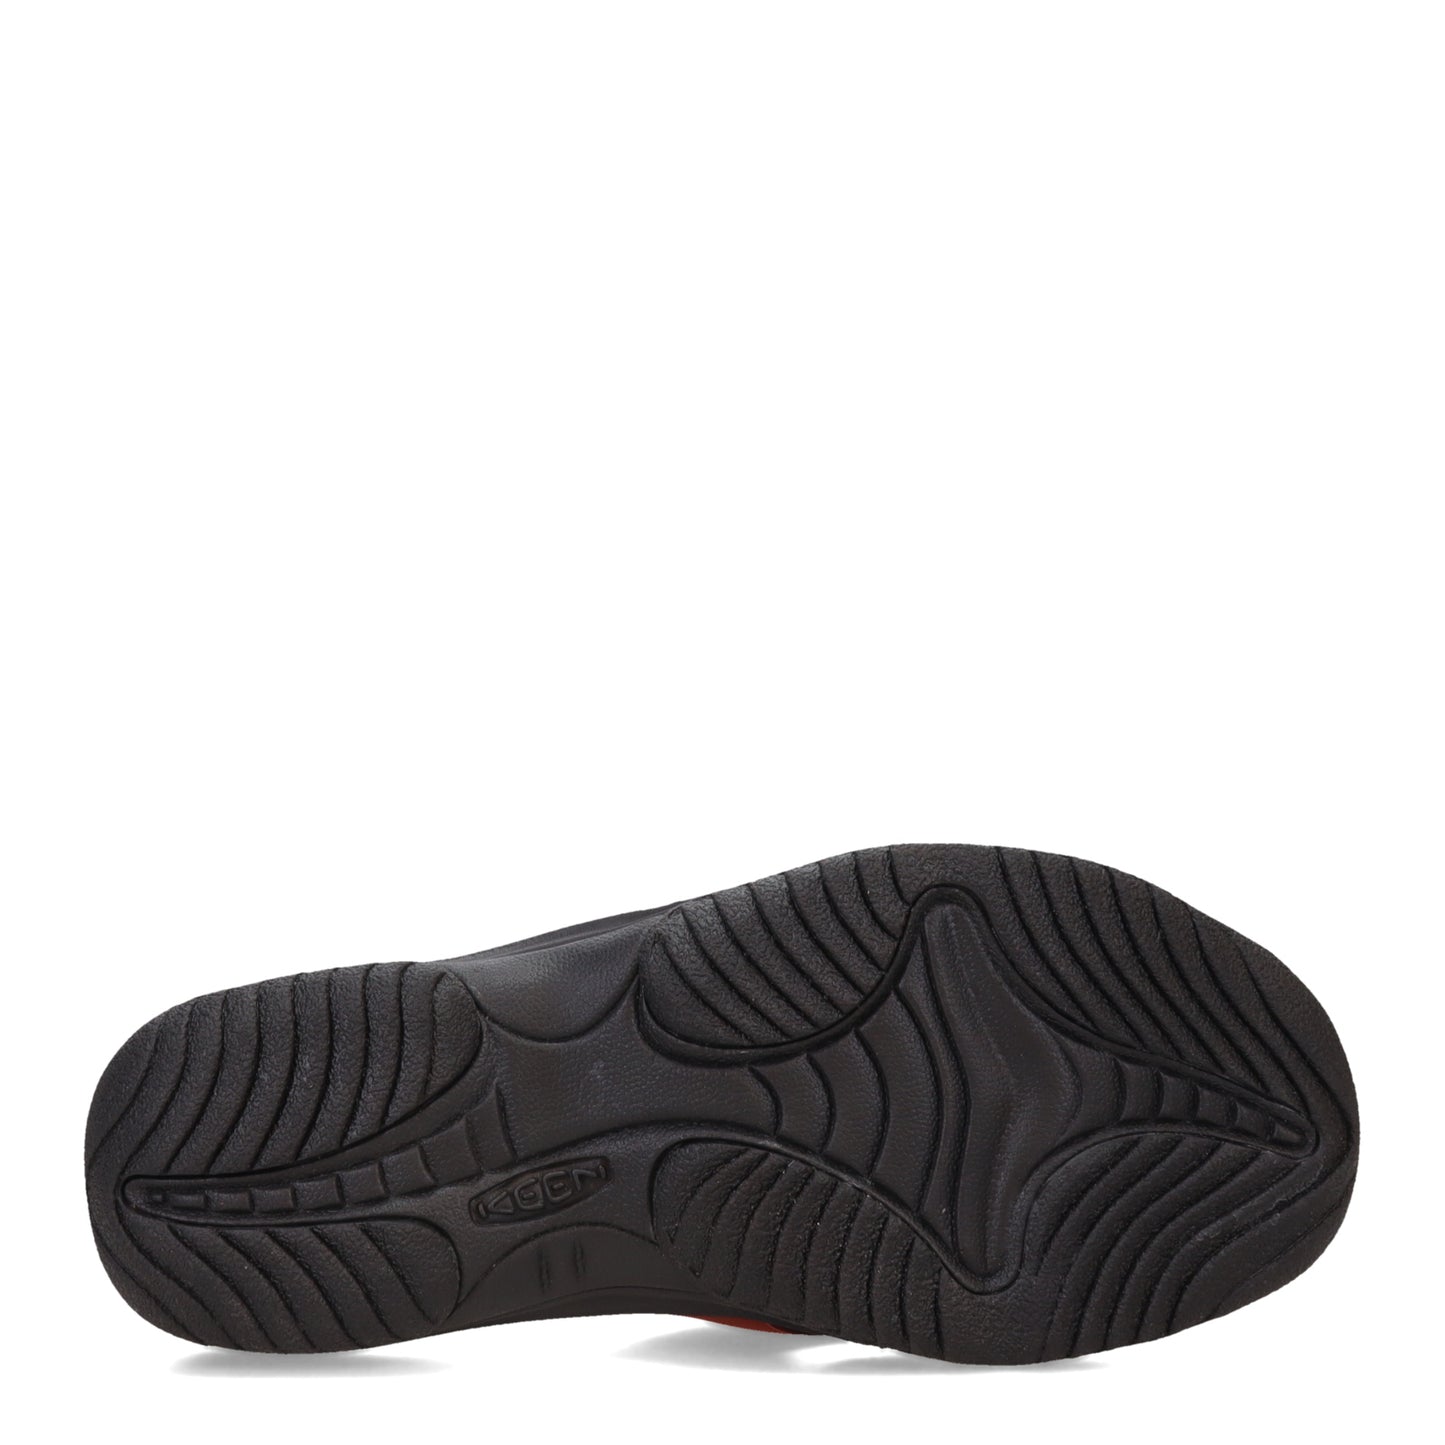 Peltz Shoes  Men's KEEN Kona Flip PCL Sandal Fired Brick/Black 1029357